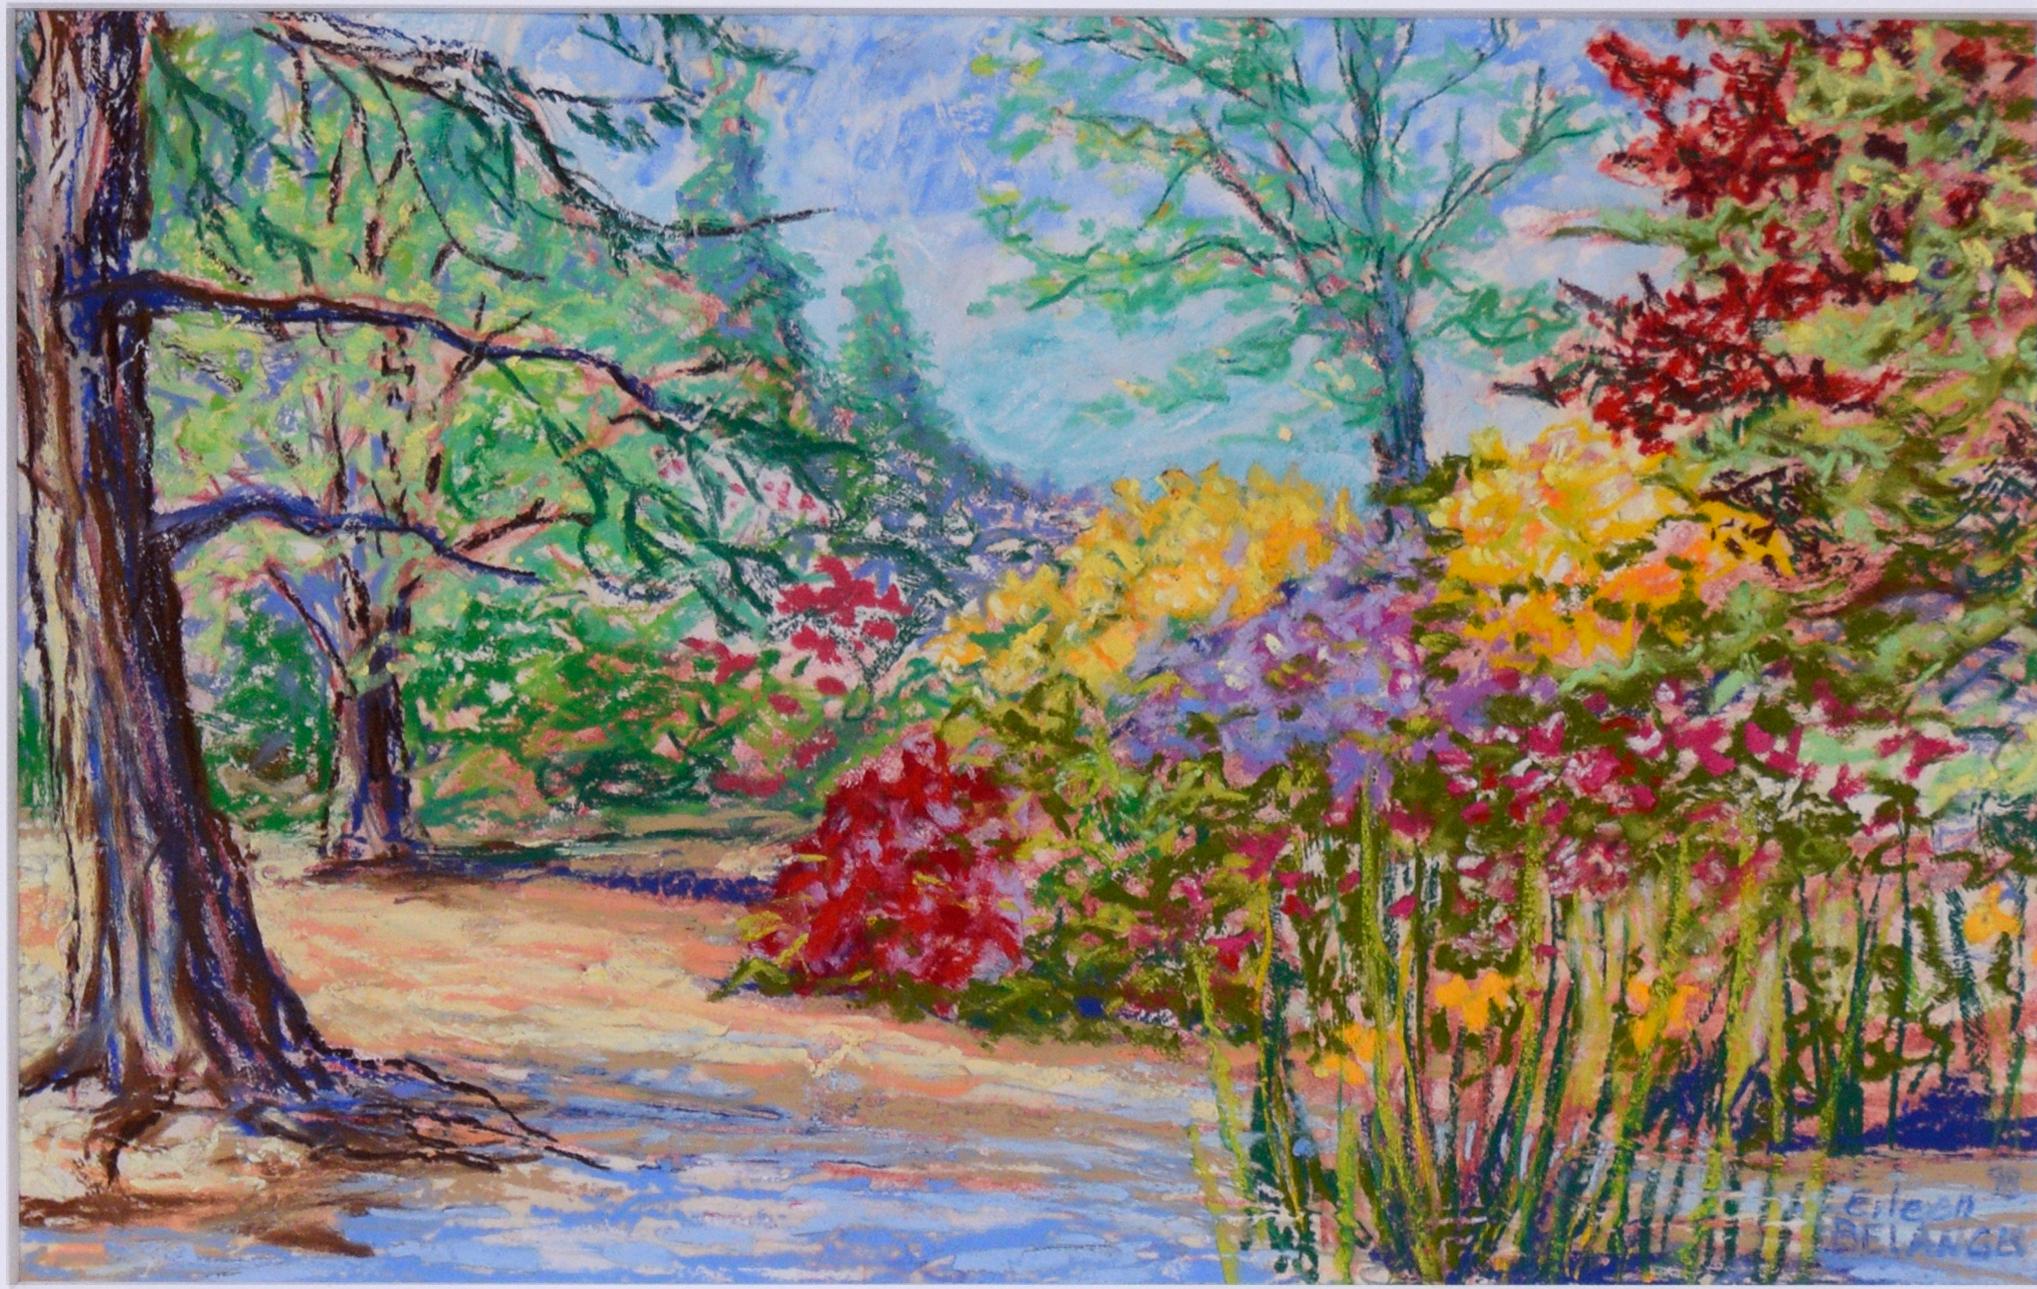 Over the Pastel Garden Wall - New England - Original Oil Pastel on Paper 1998 - Art by Eileen Belanger